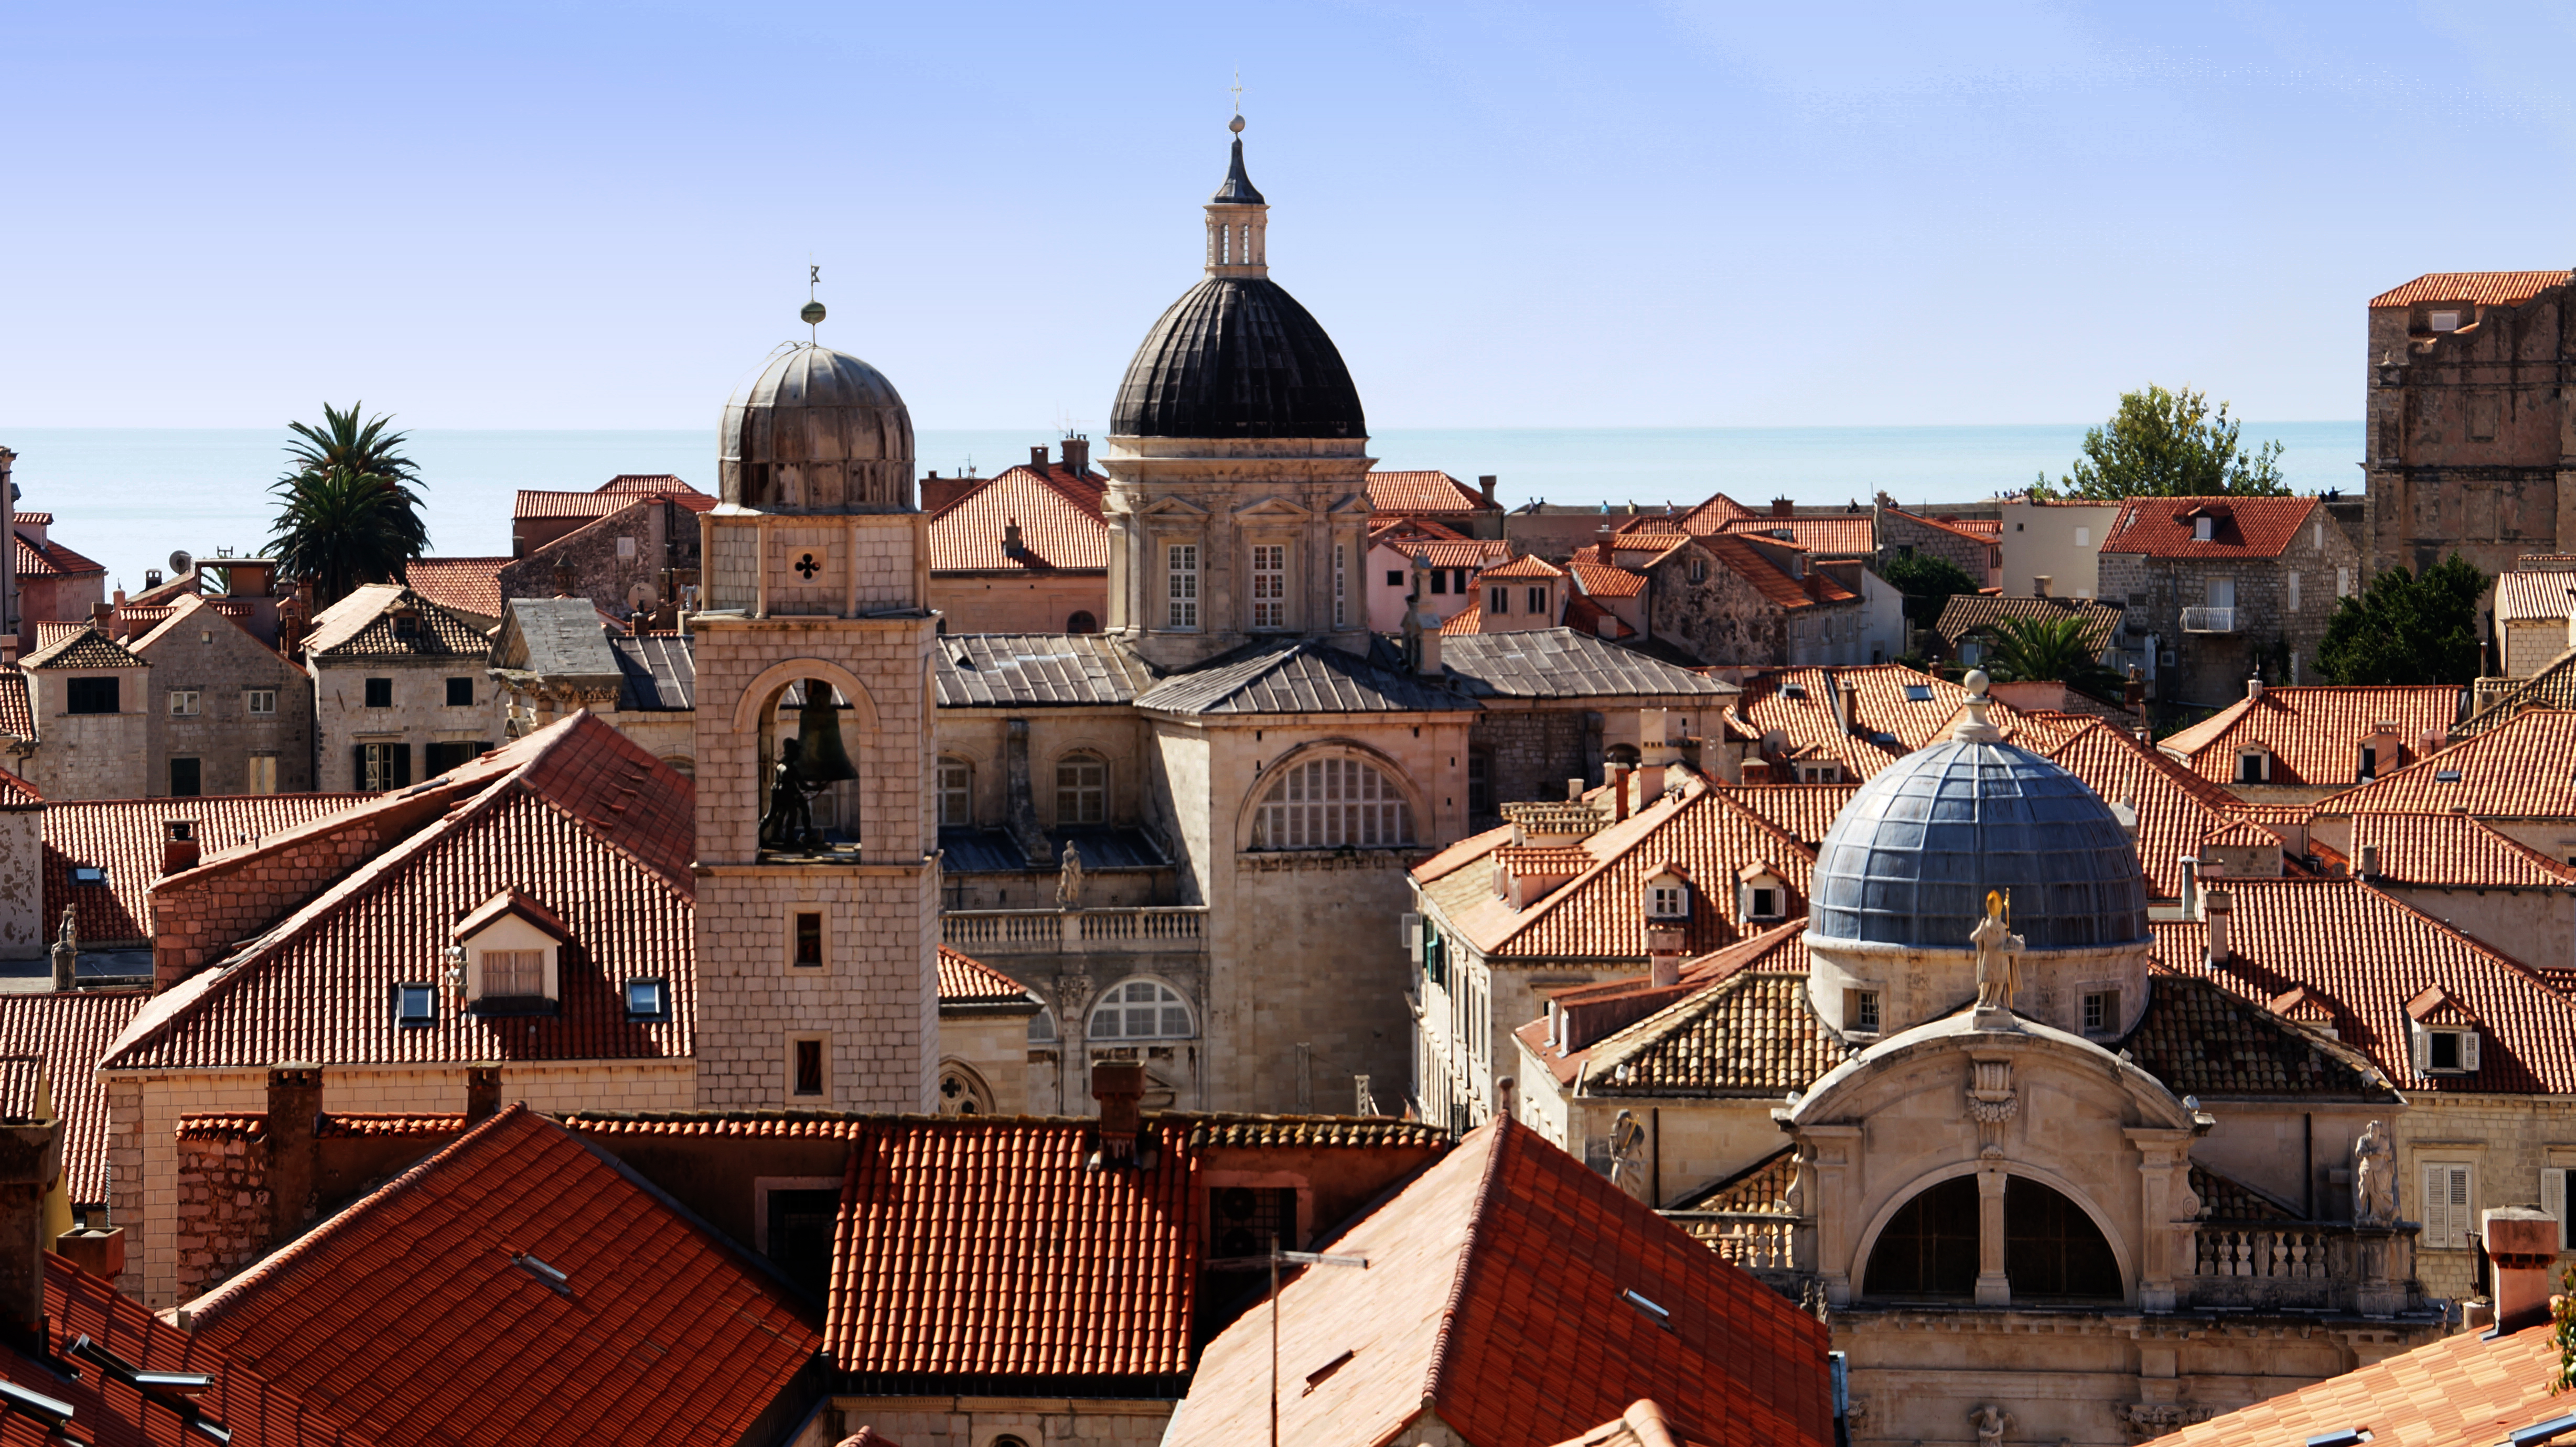 Dubrovnik, Croatia